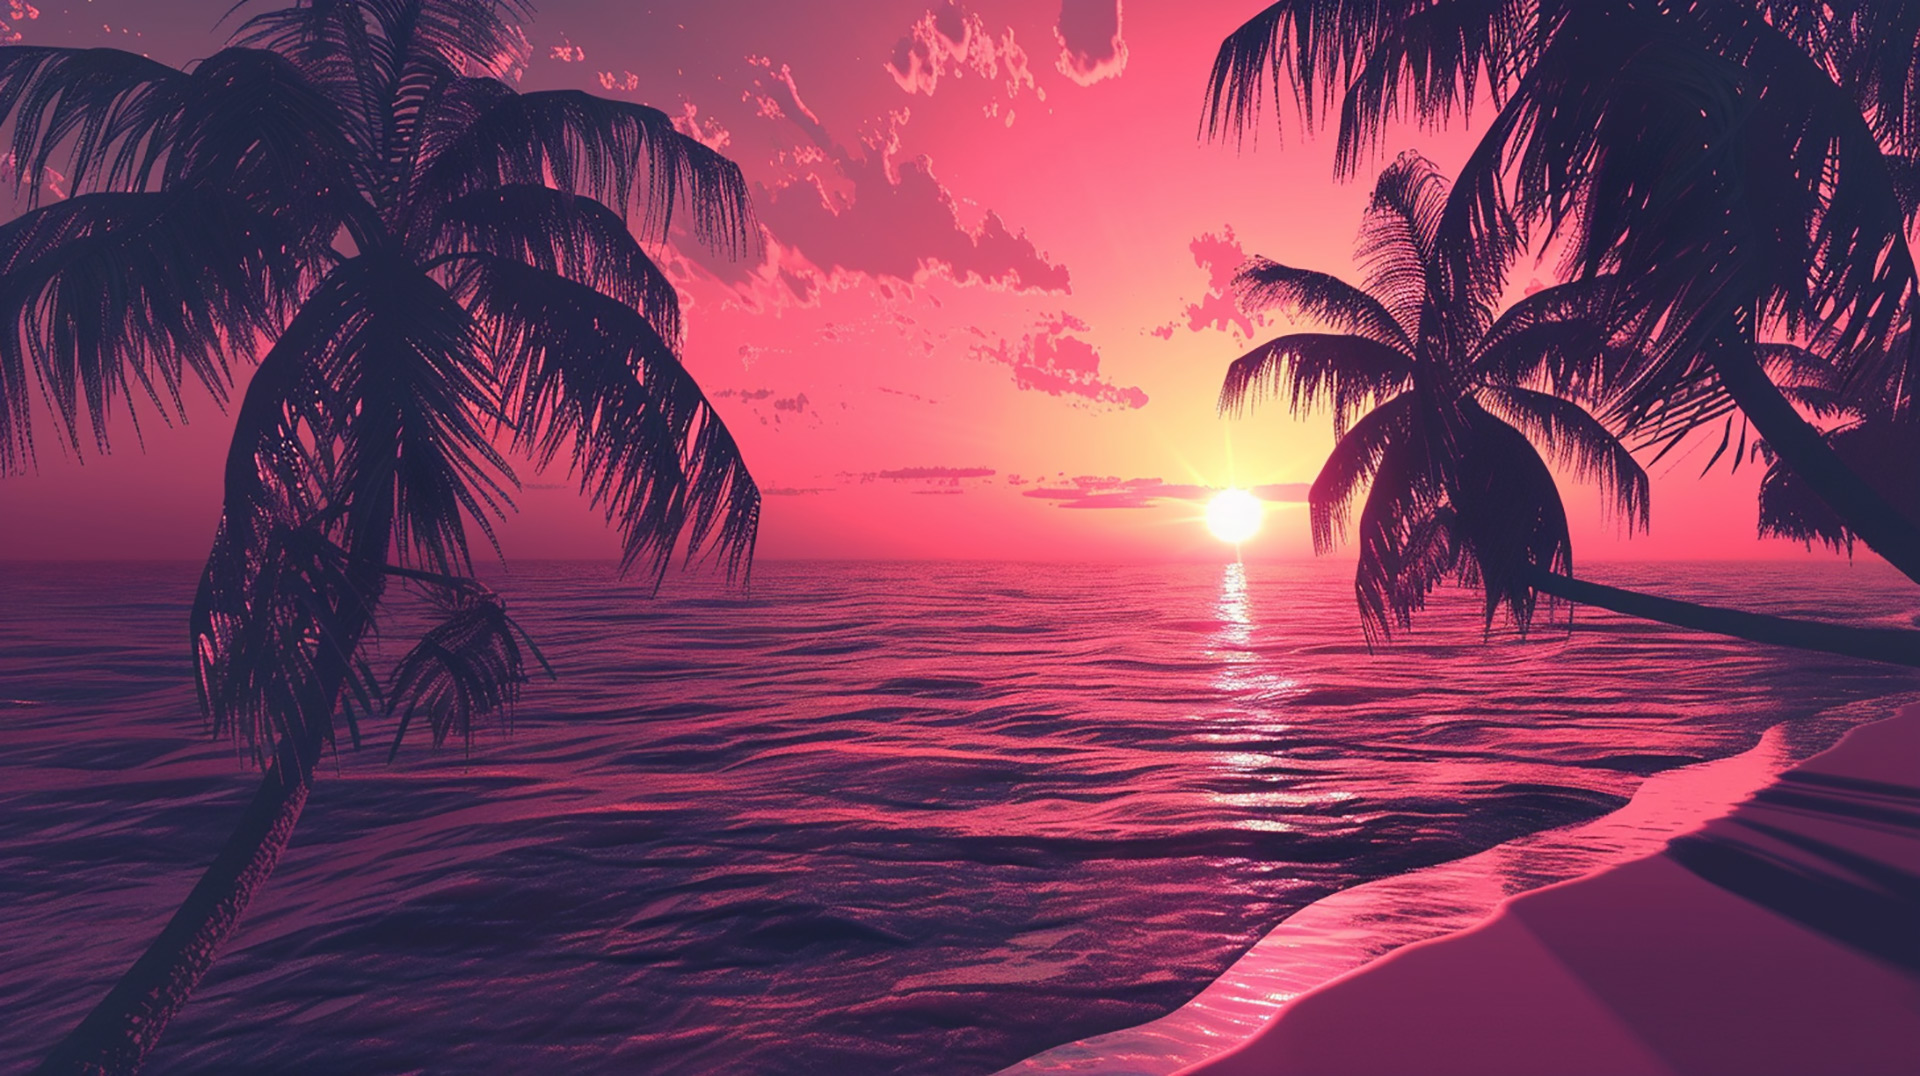 Ocean Oasis: Digital Beach Sunset Desktop Picture